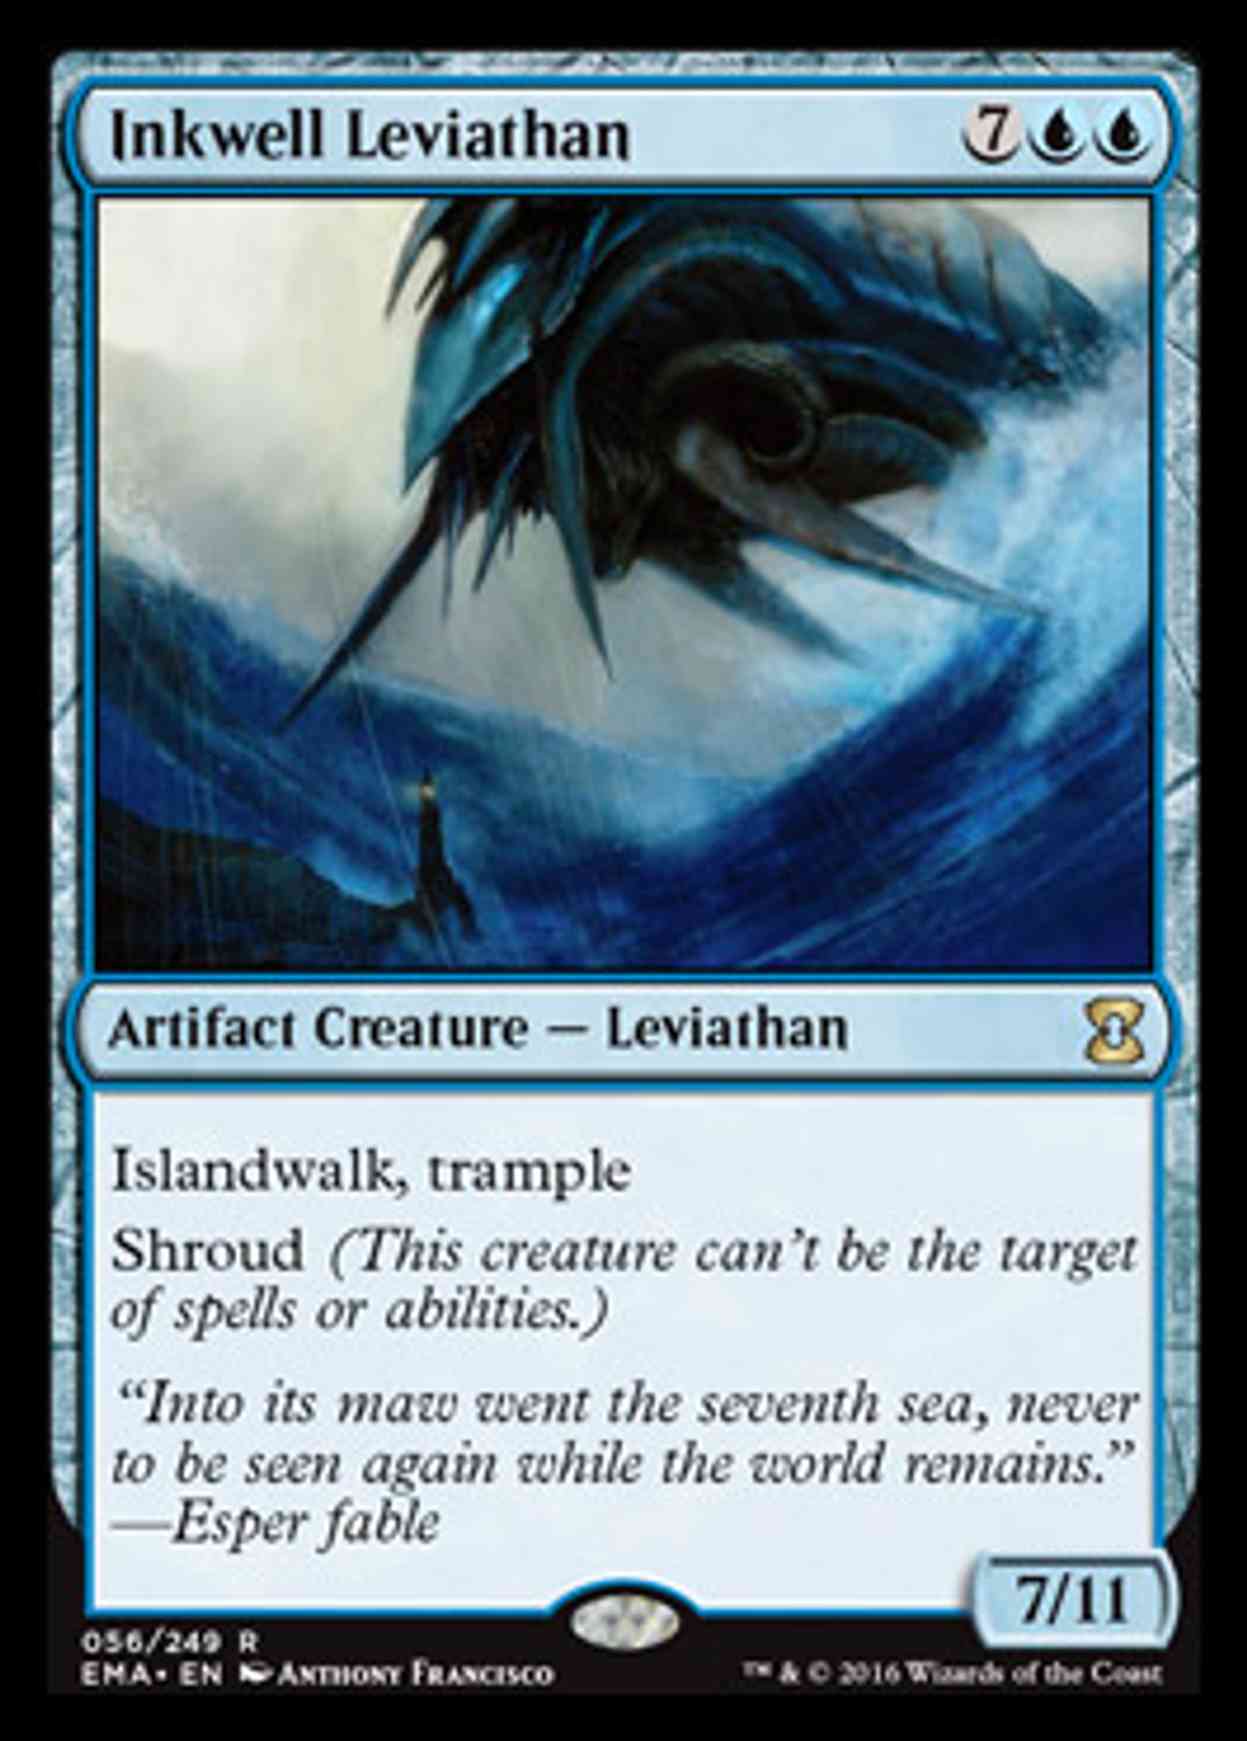 Inkwell Leviathan magic card front